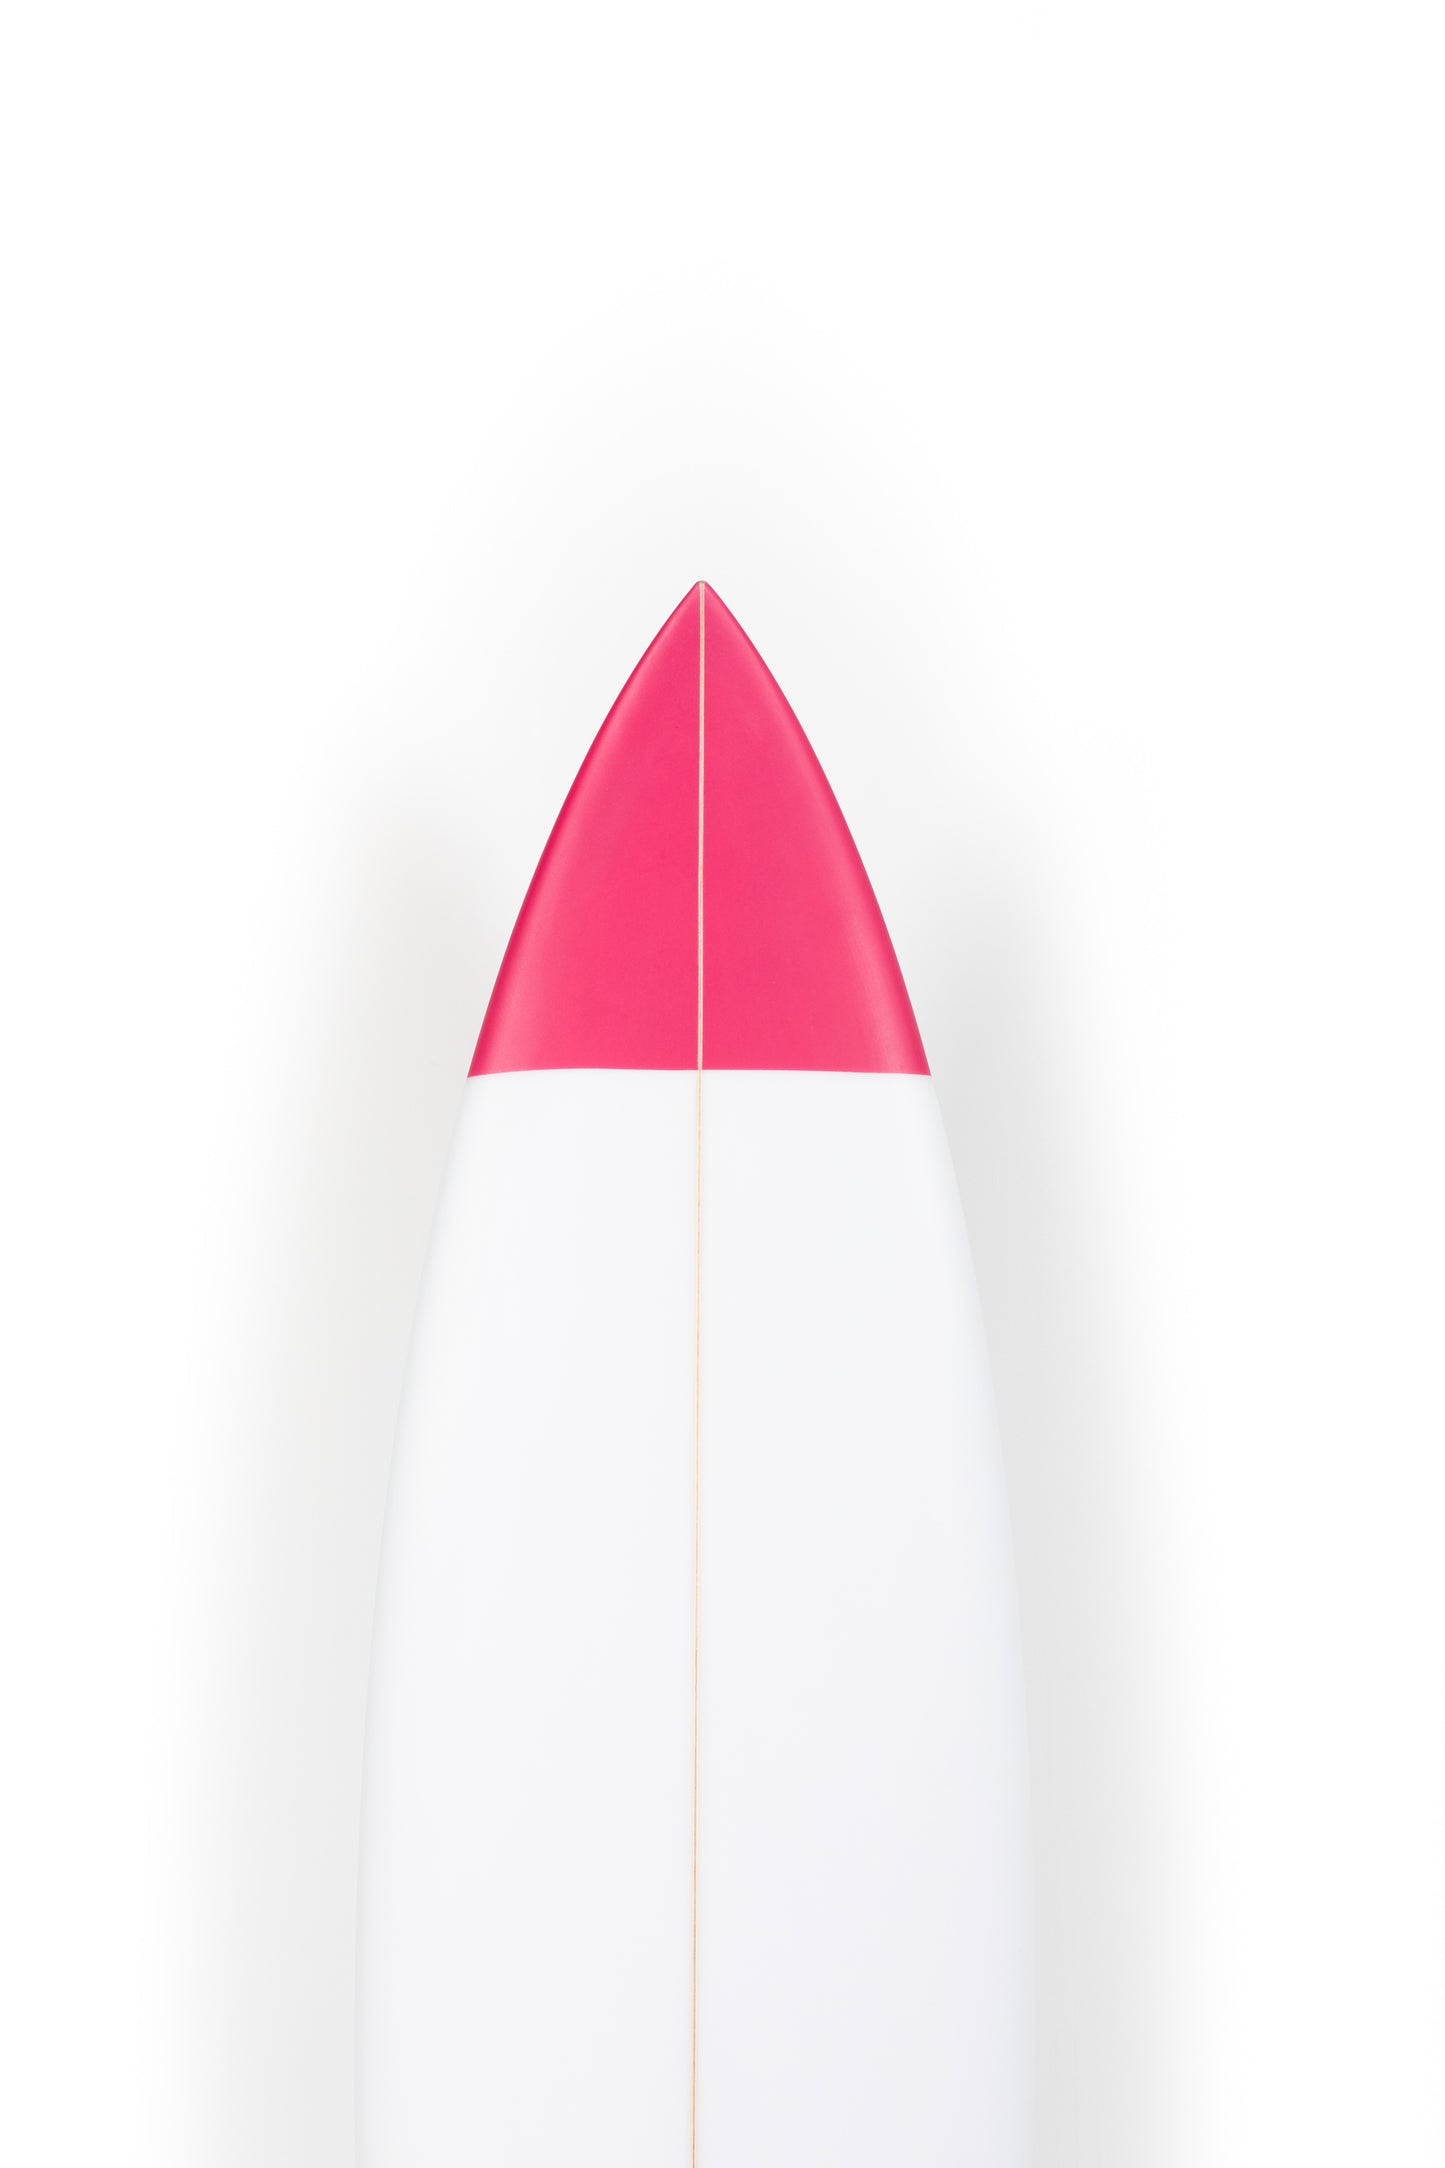 
                  
                    Pukas Surf shop - Lost Surfboards - DRIVER 3.0 by Matt Biolos - 6'4" x 19 7/8 x 2 11/16 x 34,55L - MH15395
                  
                